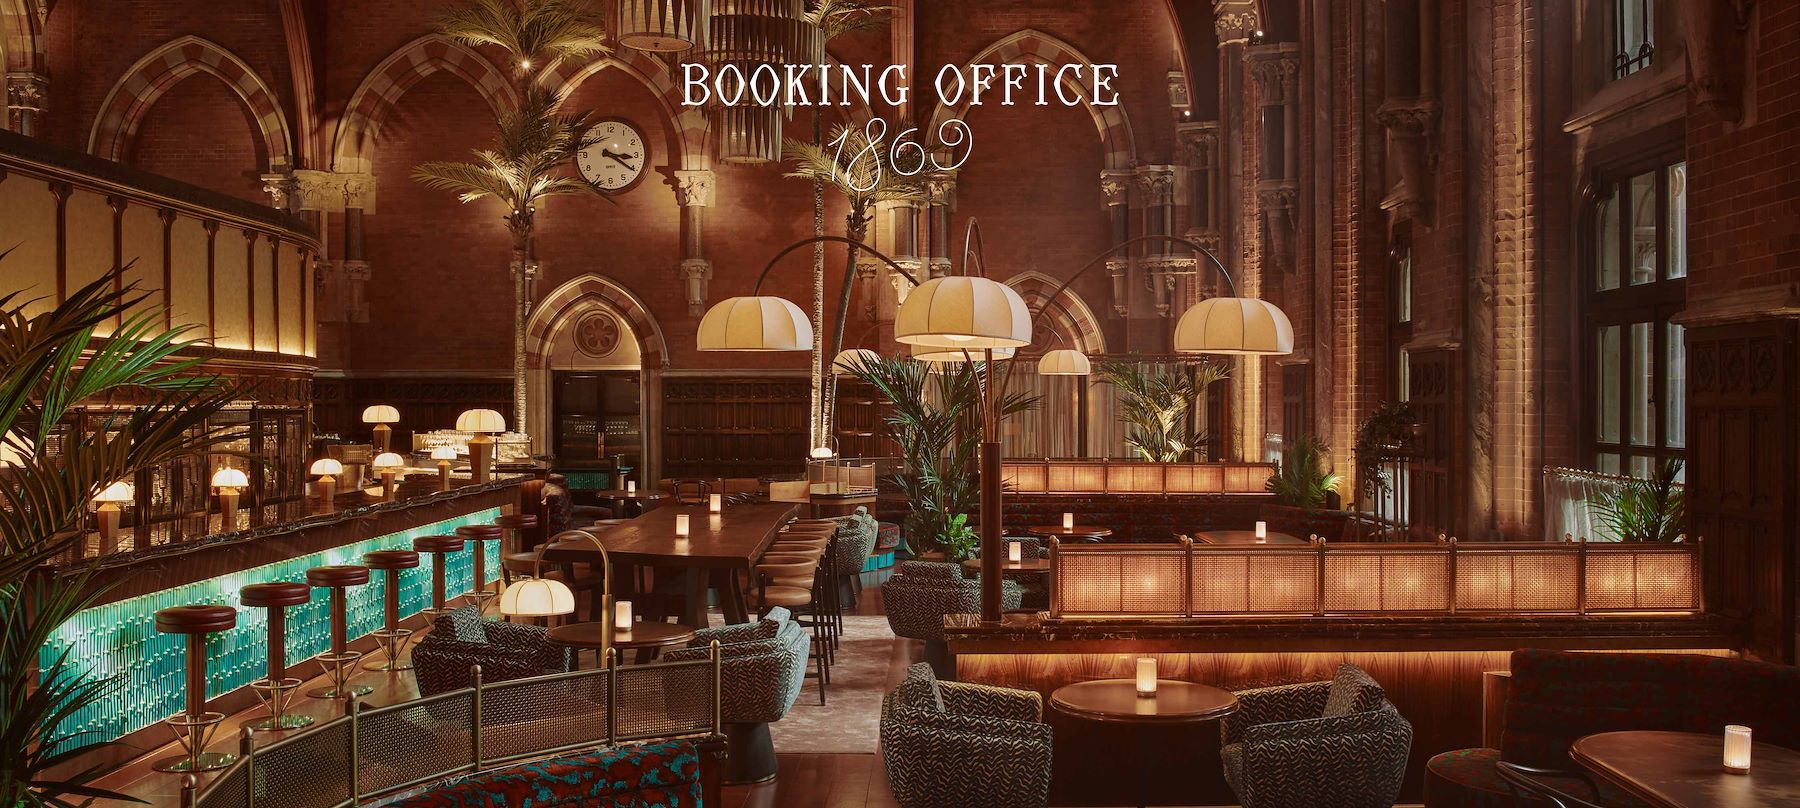 Booking Office 1869 | Restaurant & Bar | King's Cross